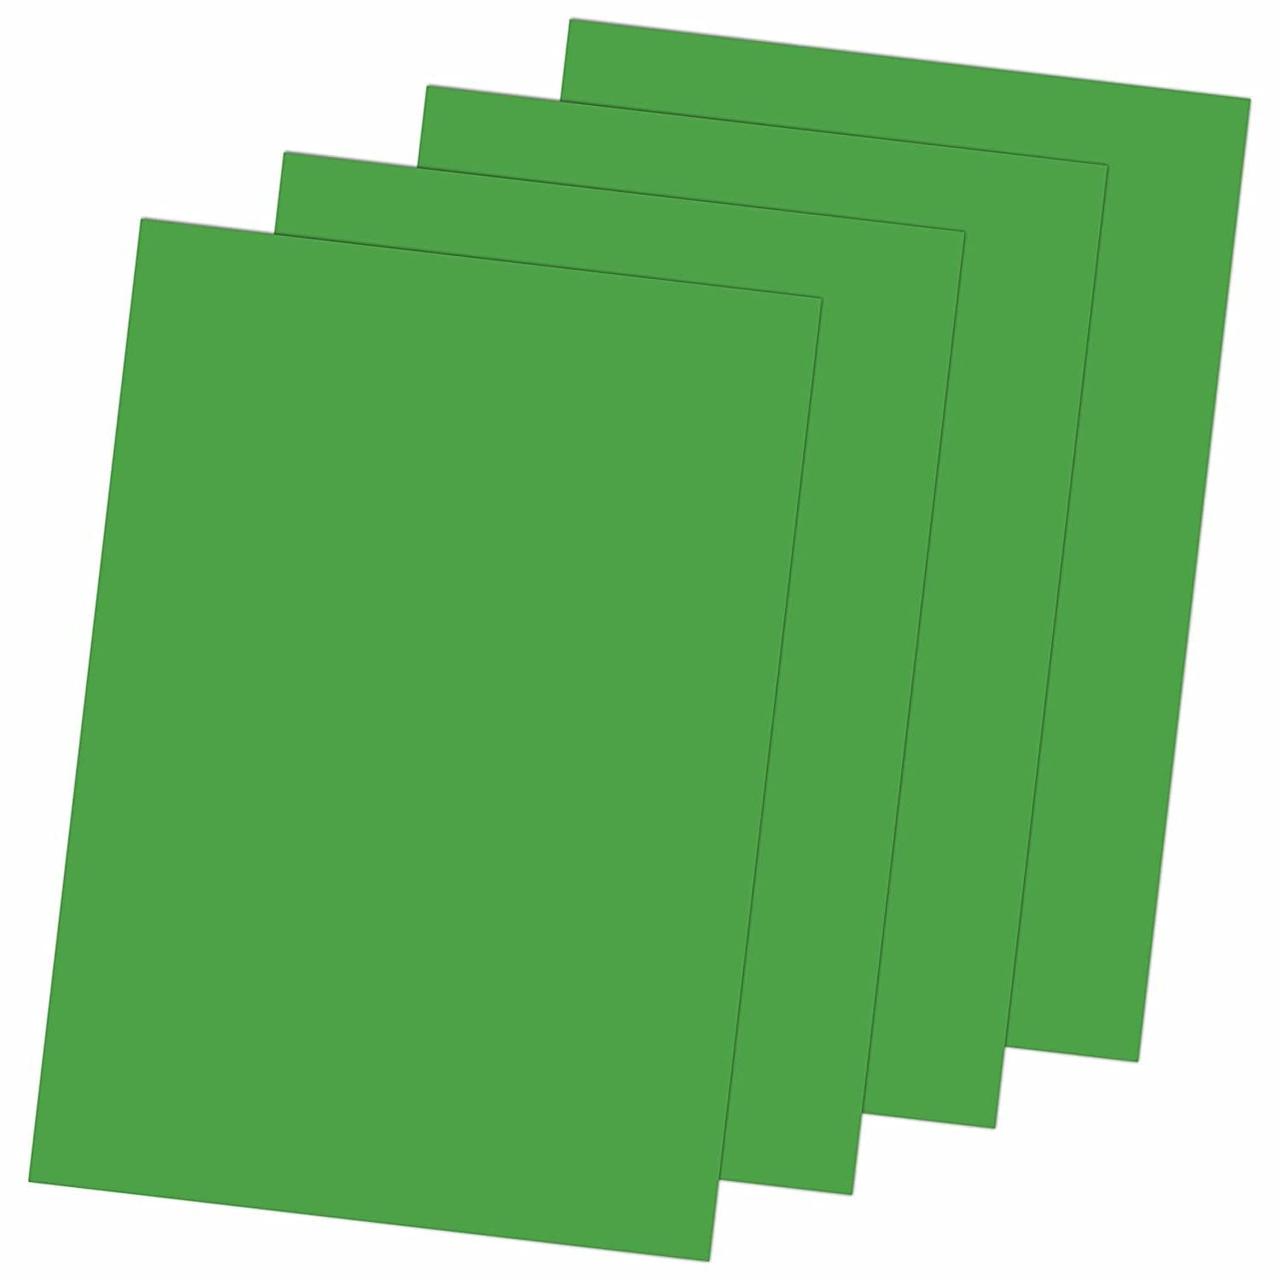 Бумага цветная, А4, 80 г/м, ярко-зеленый (Parrot), 100 листов